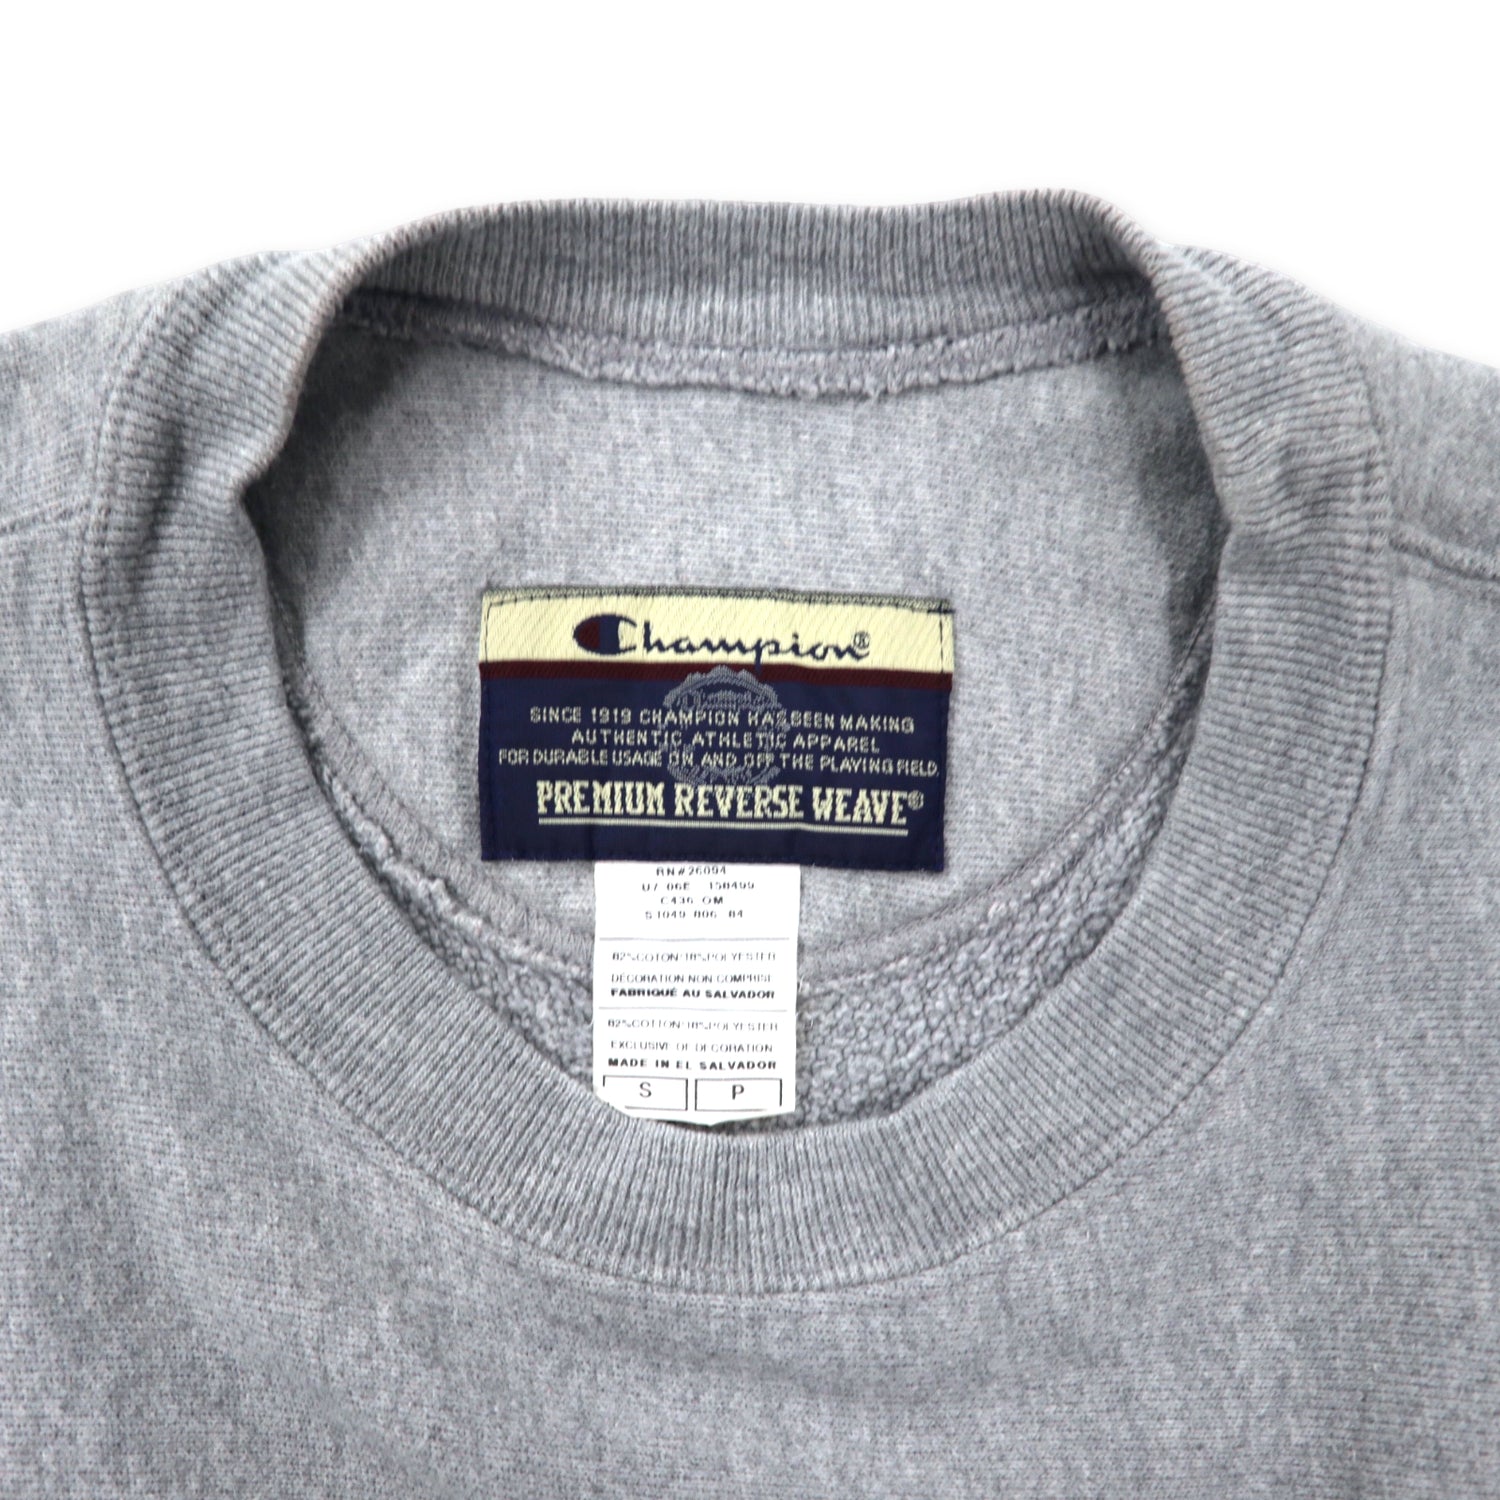 Champion Premium Reverse Weave Sweatshirt S Gray Cotton SMS 